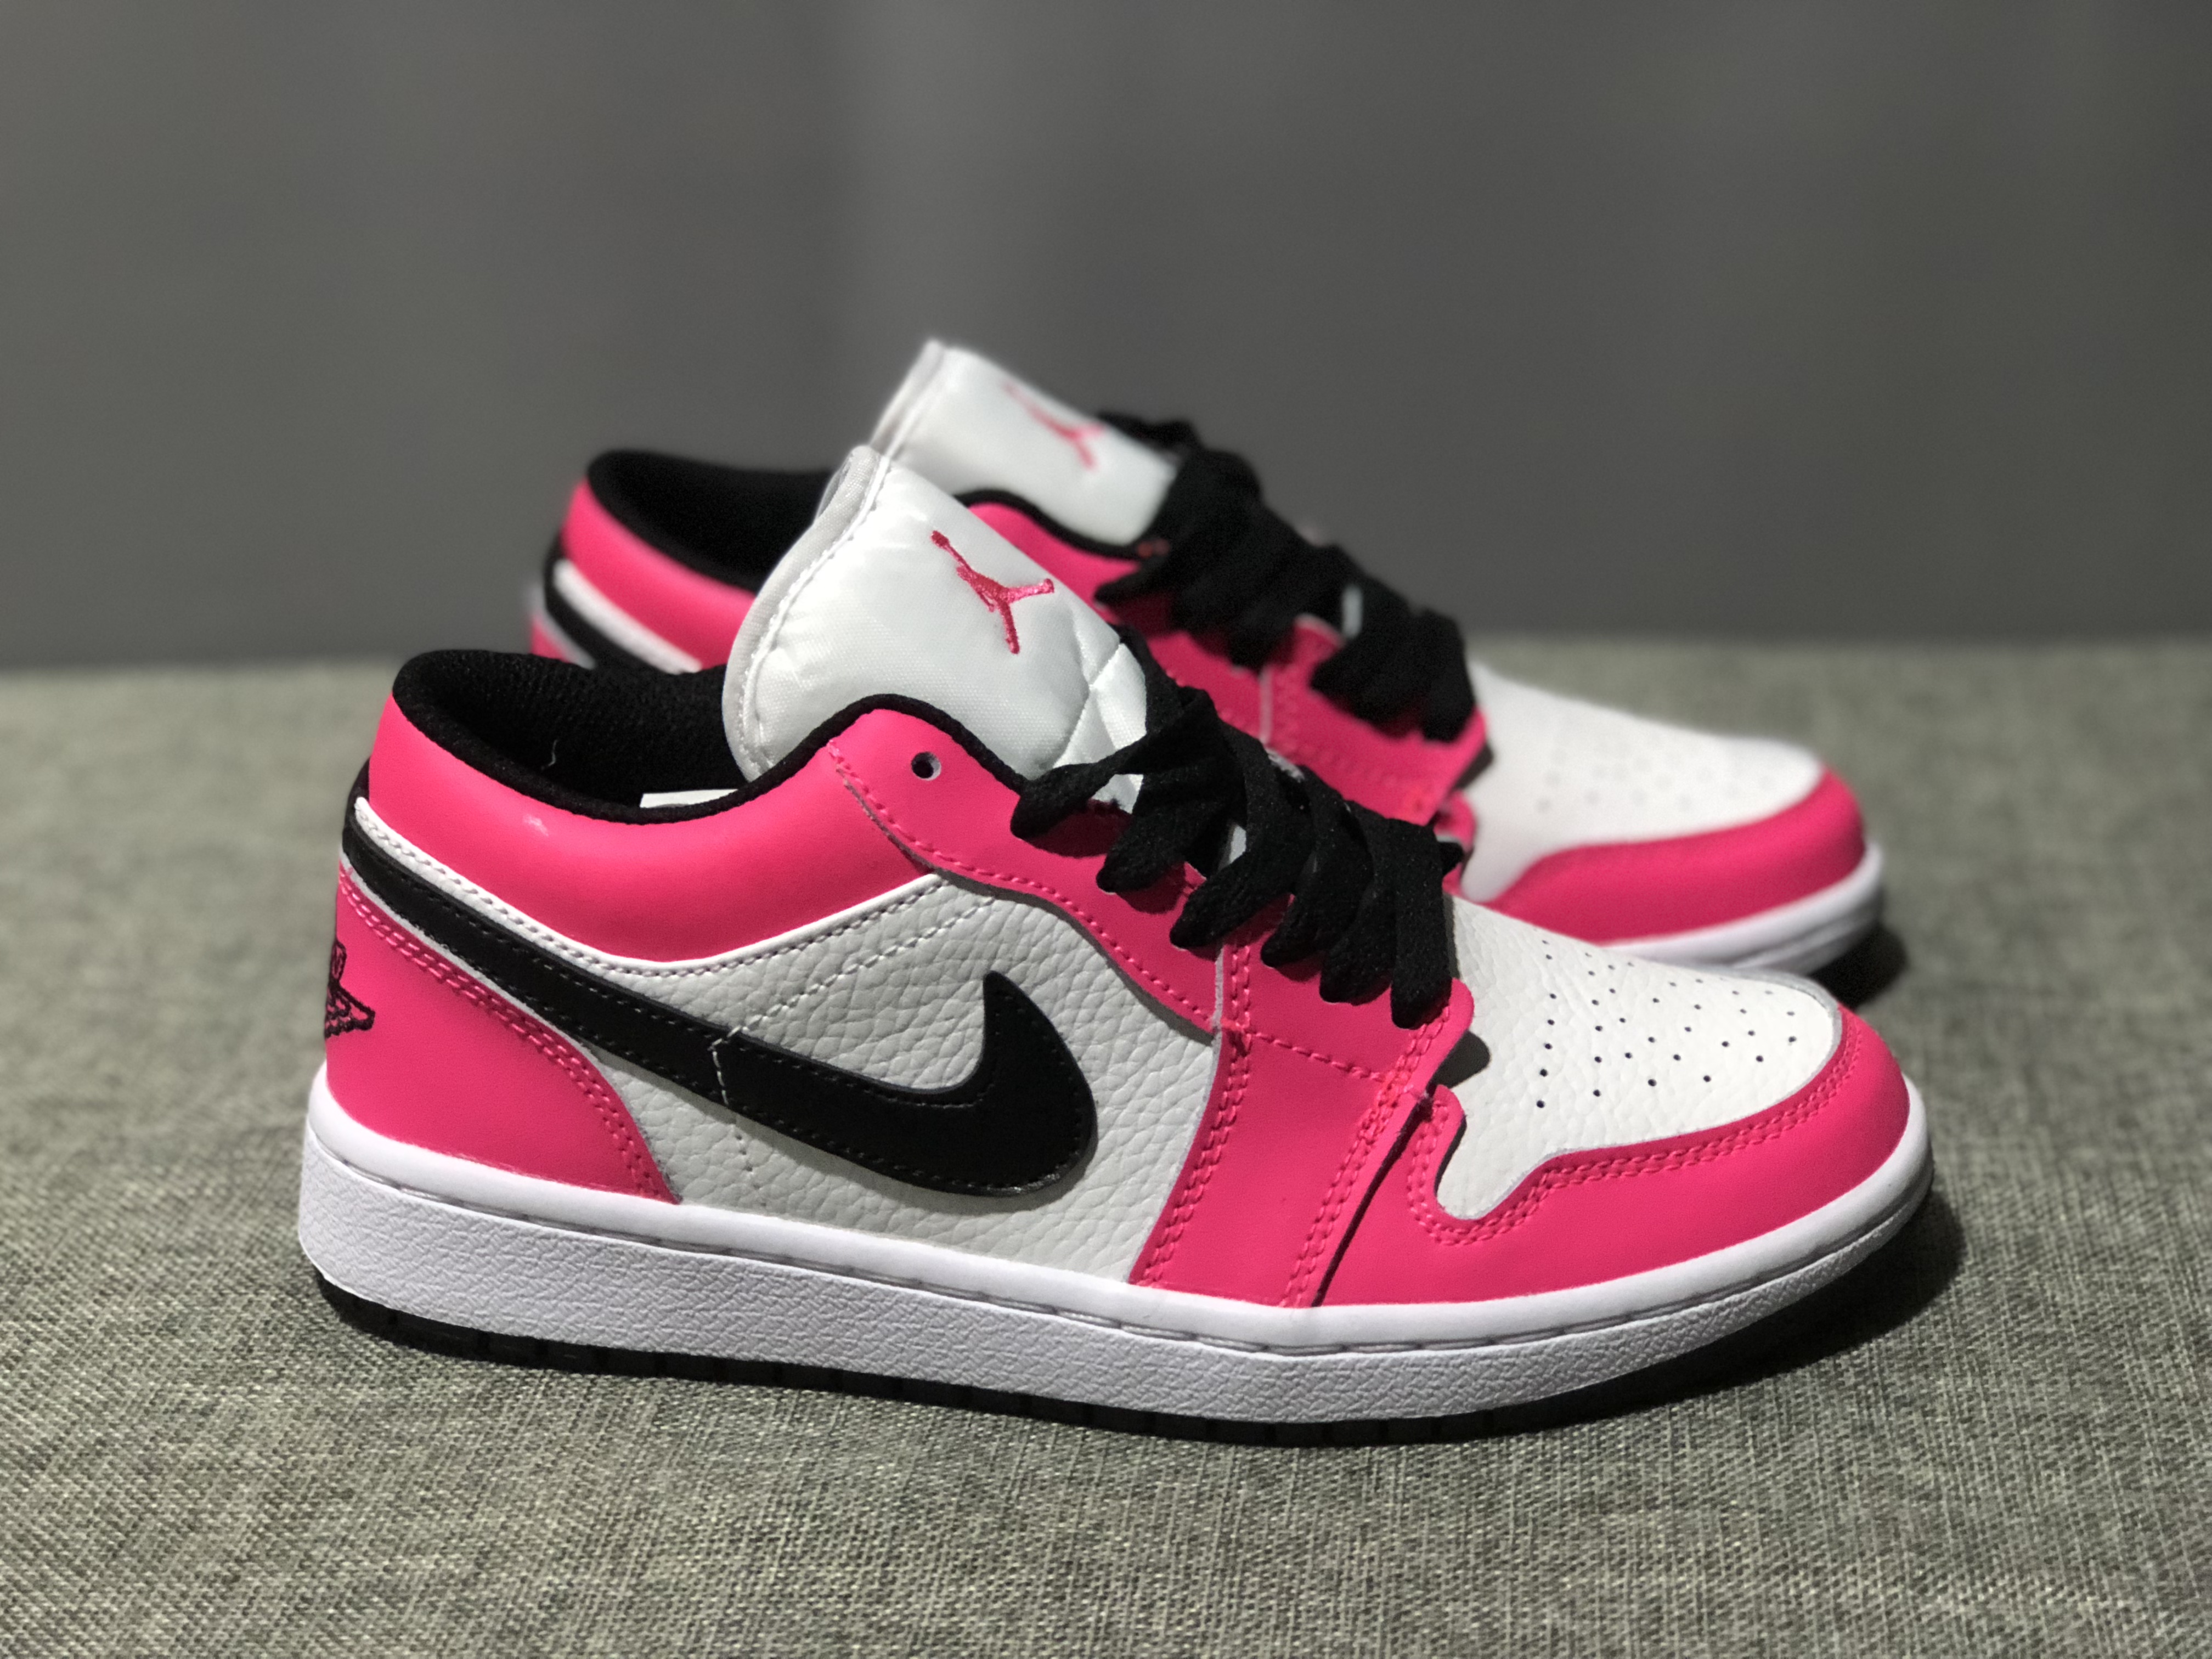 Air Jordan AJ1 Low Valentine's Day White Pink Black Shoes